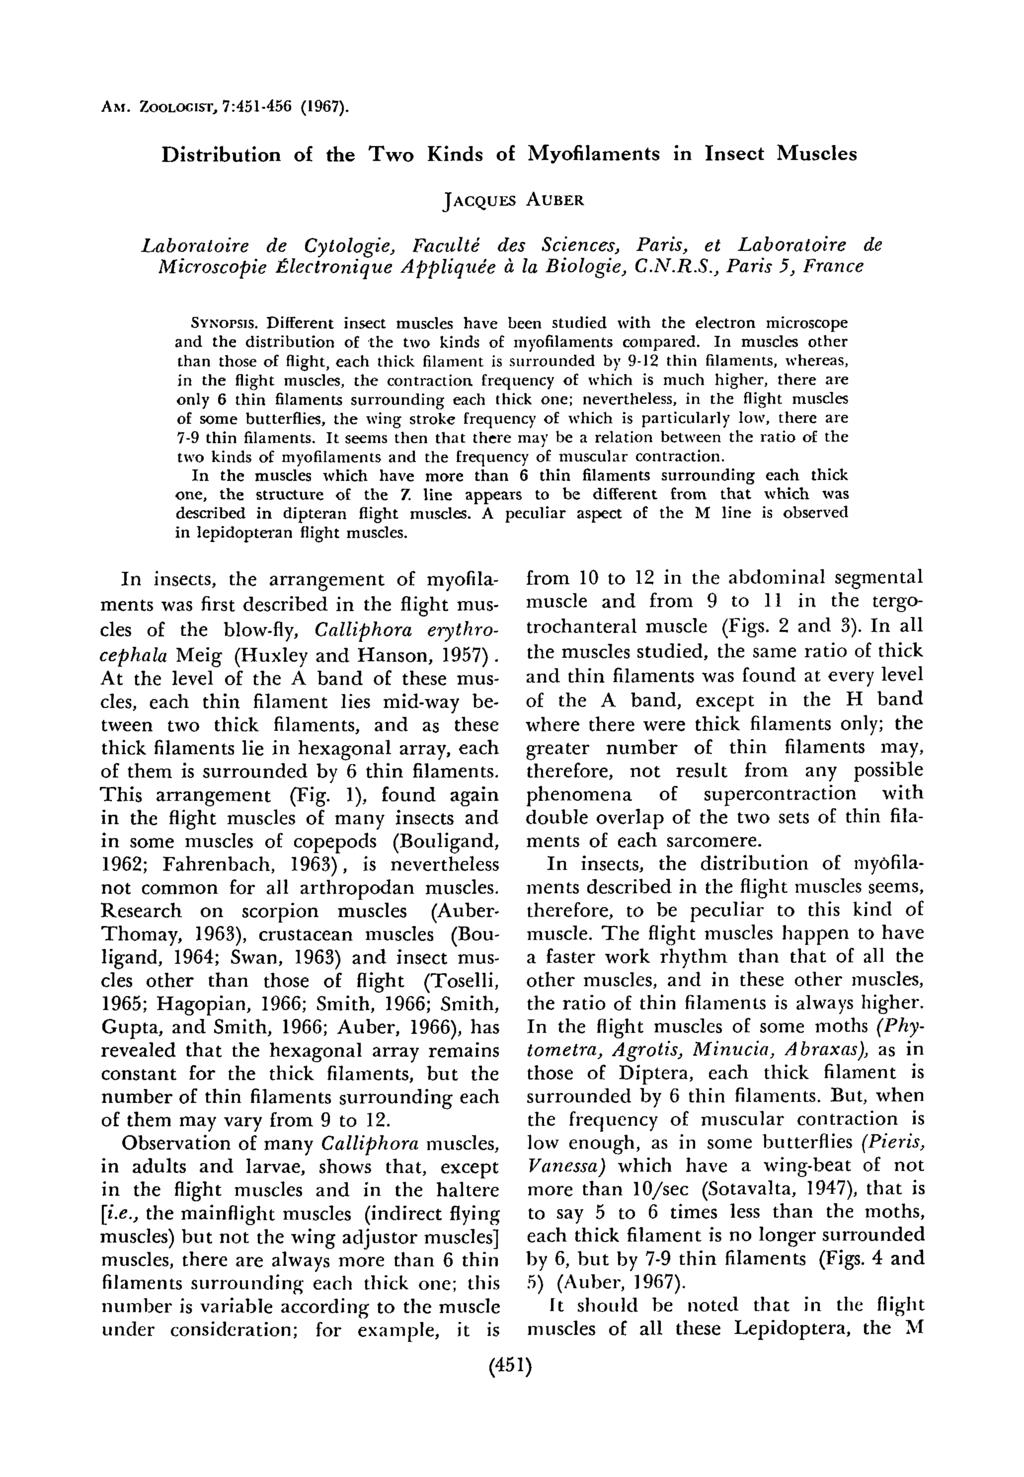 AM. ZOOLOCIST, 7:451-456 (1967).